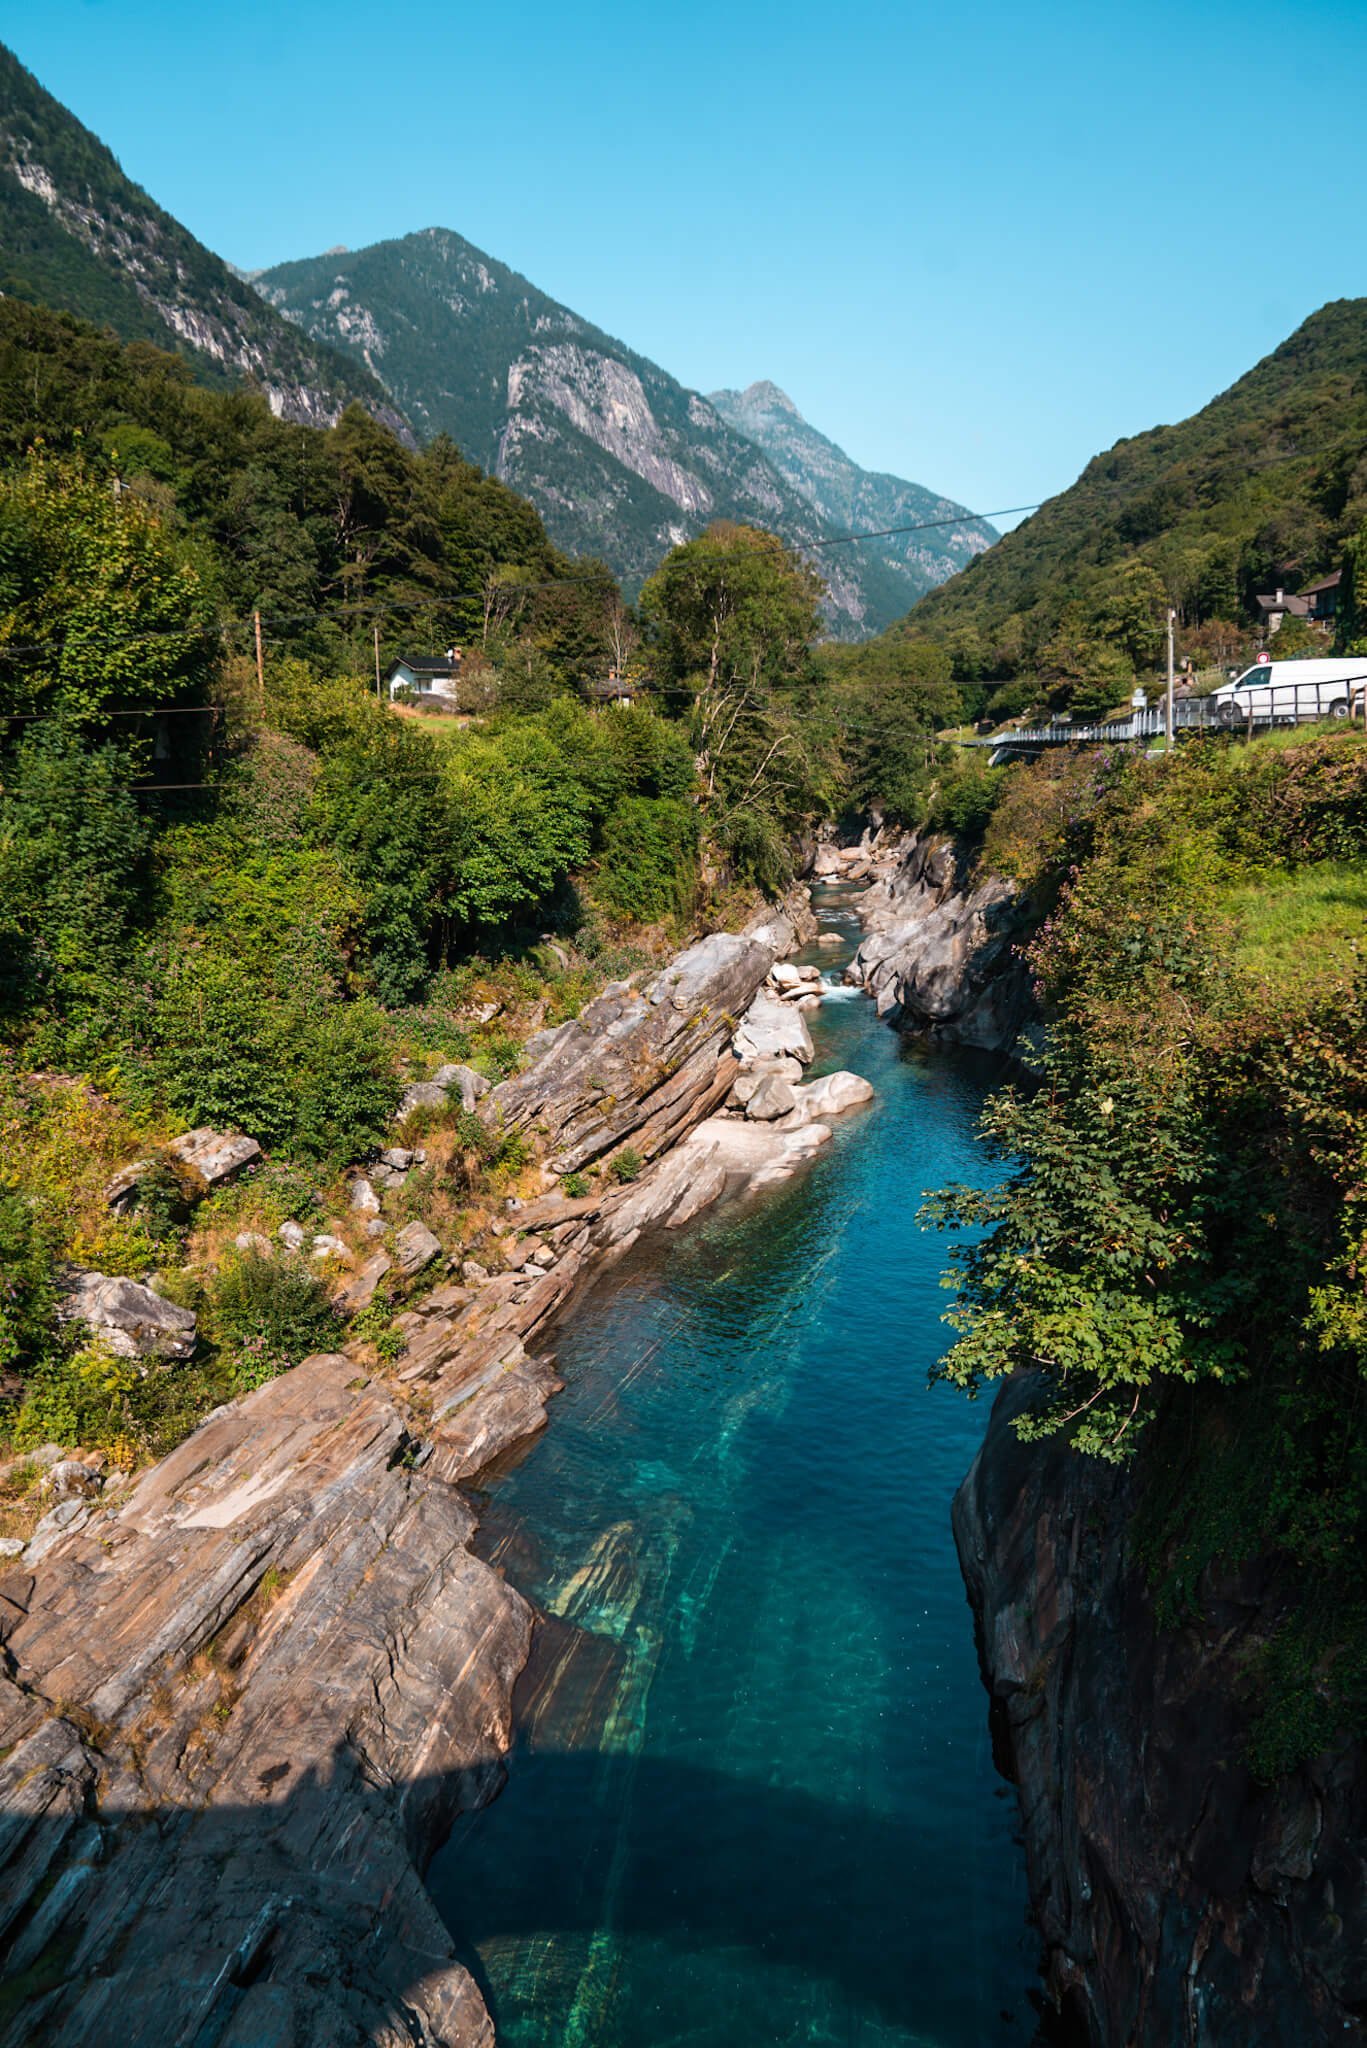 Ticino, Switzerland travel guide reocmmendations